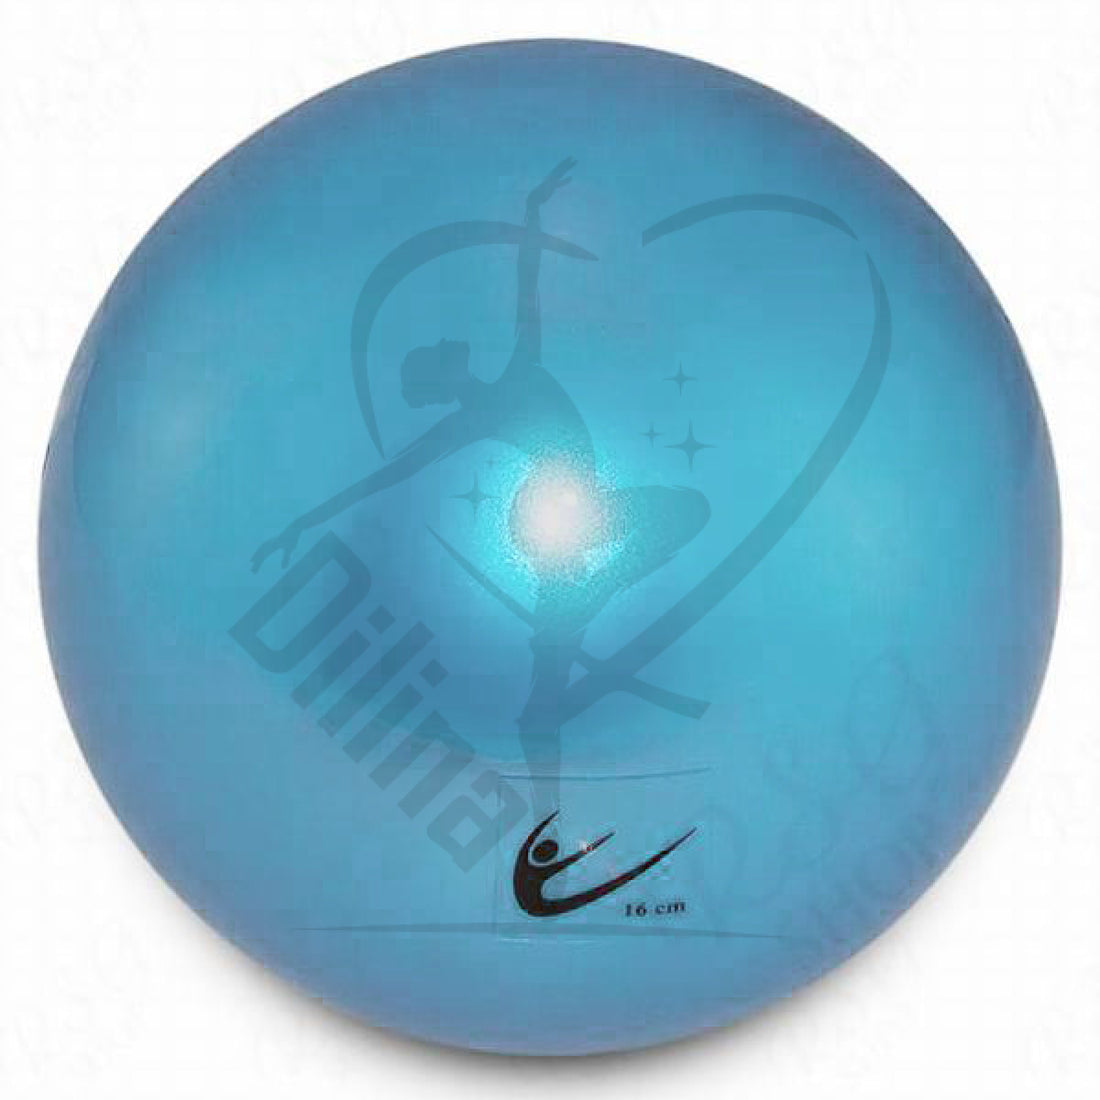 Tuloni Junior Metallic Ball 16Cm Light Blue Balls